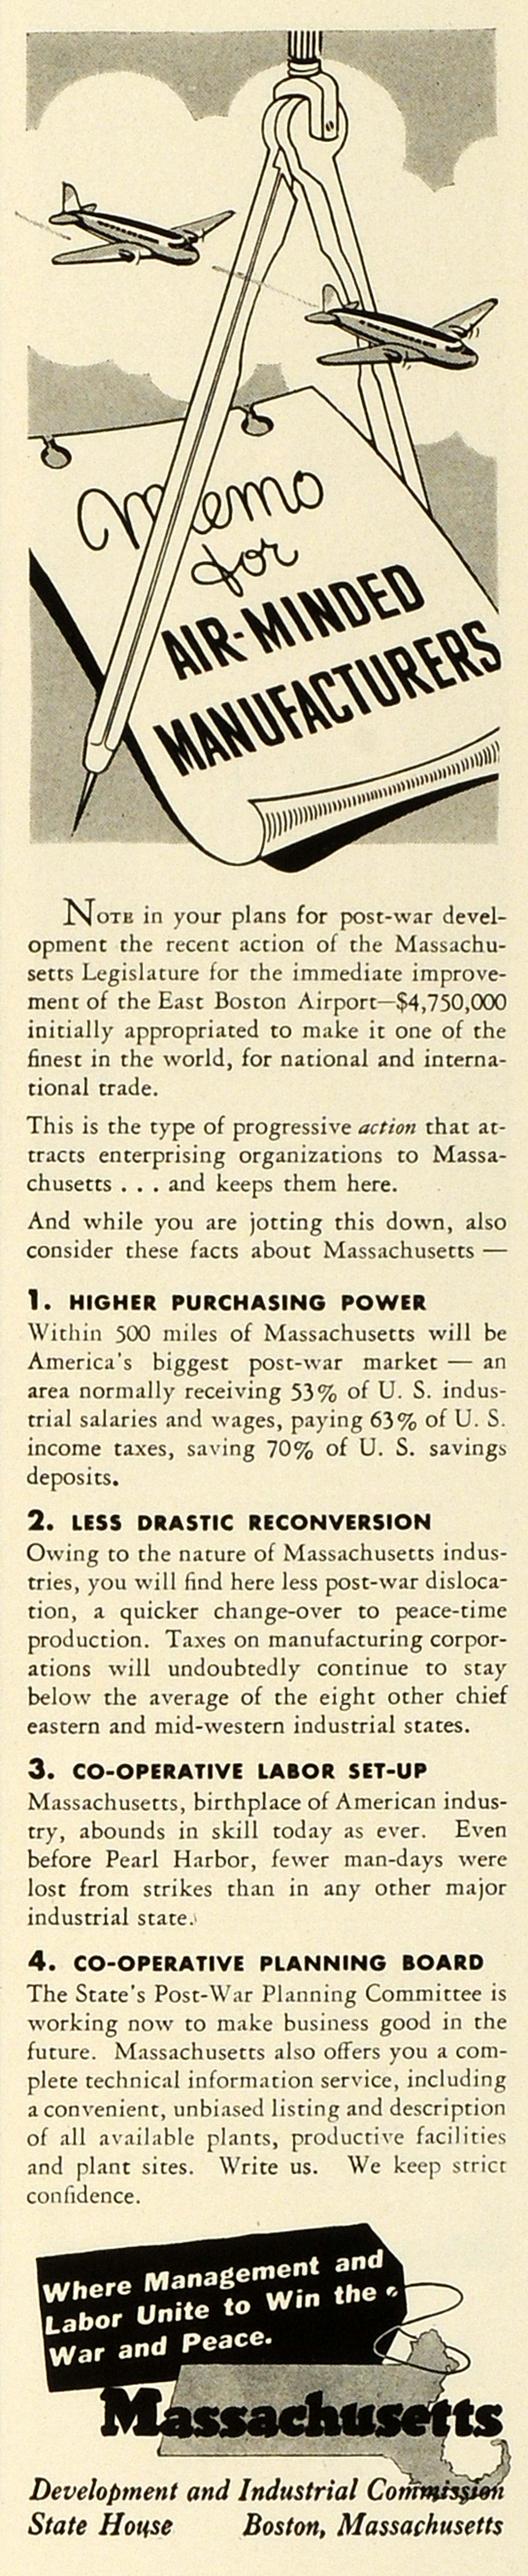 1943 Ad Development & Industrial Commission State House Boston Massachusetts FZ5